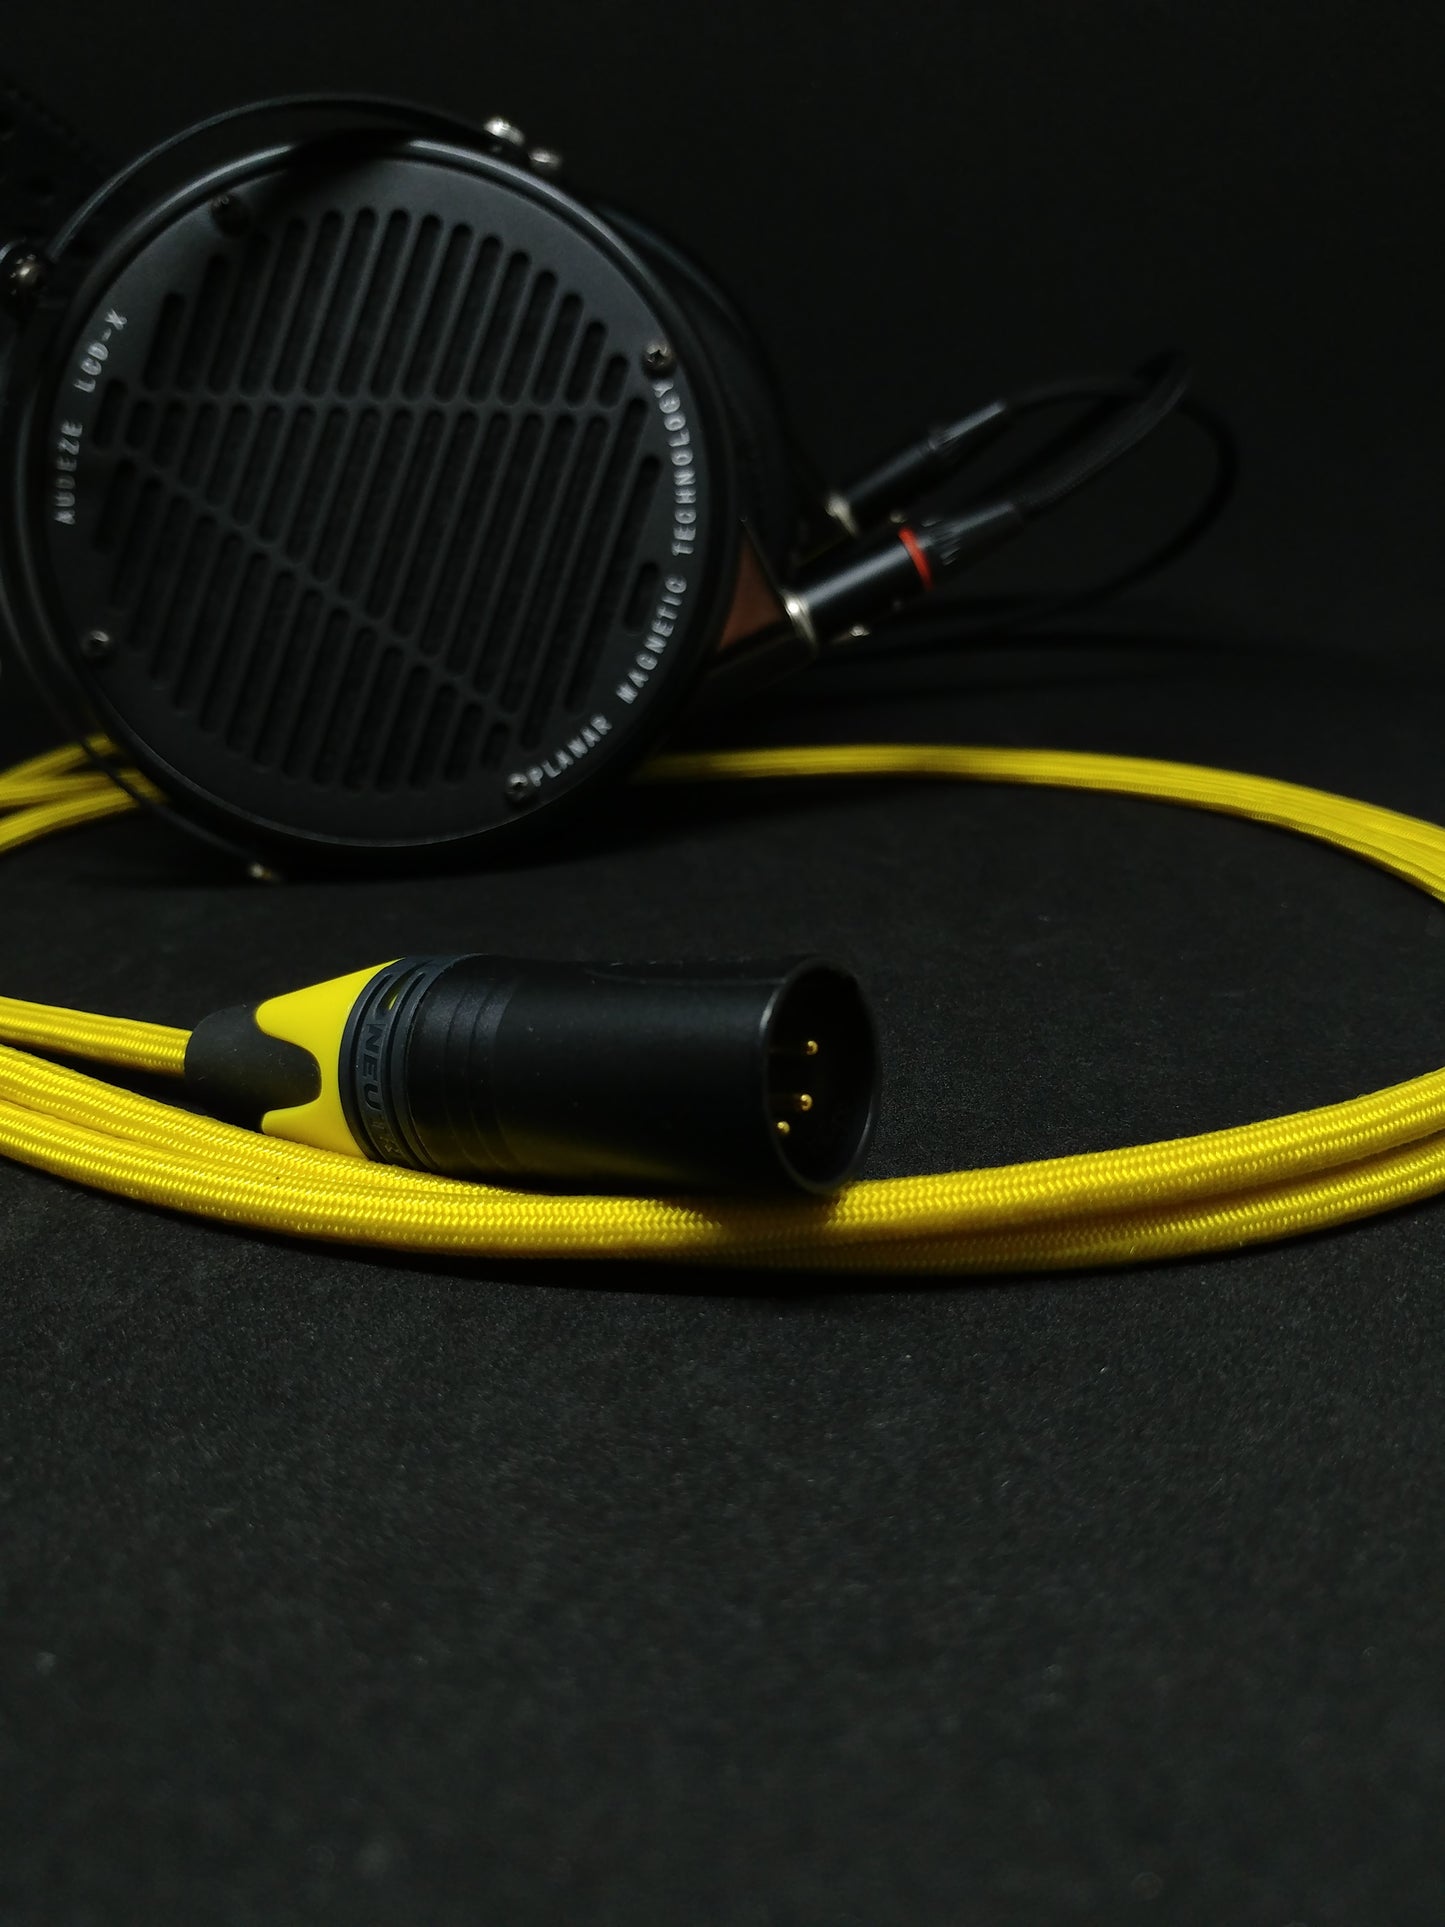 Dual 4 Pin Mini XLR Custom Headphone Cable | Air